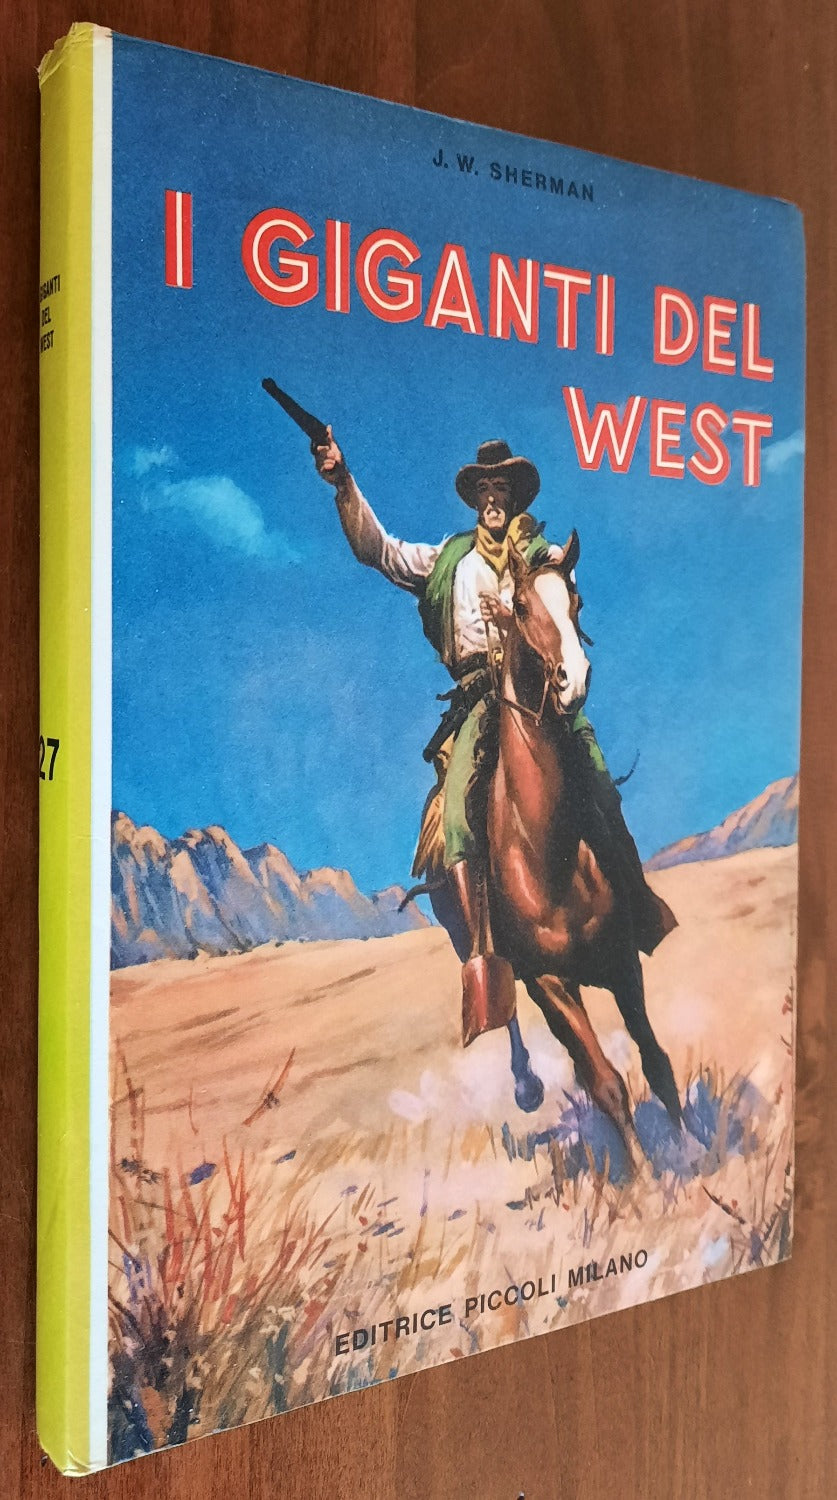 I giganti del west - J.W. Sherman